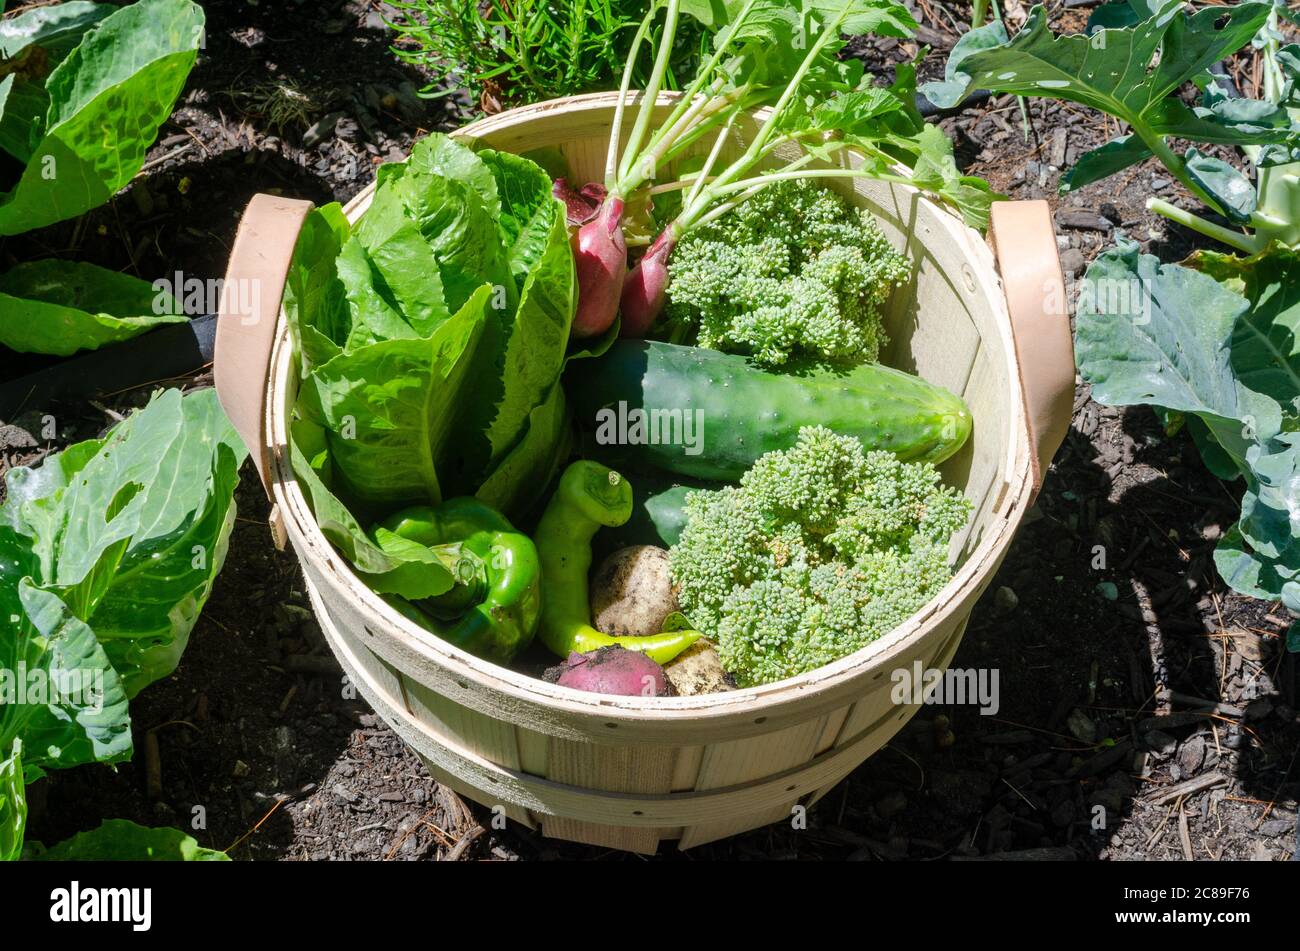 Fresh garden vegetable harvest hod with broccoli, romaine, cuke, radish, potatoes & peppers Stock Photo